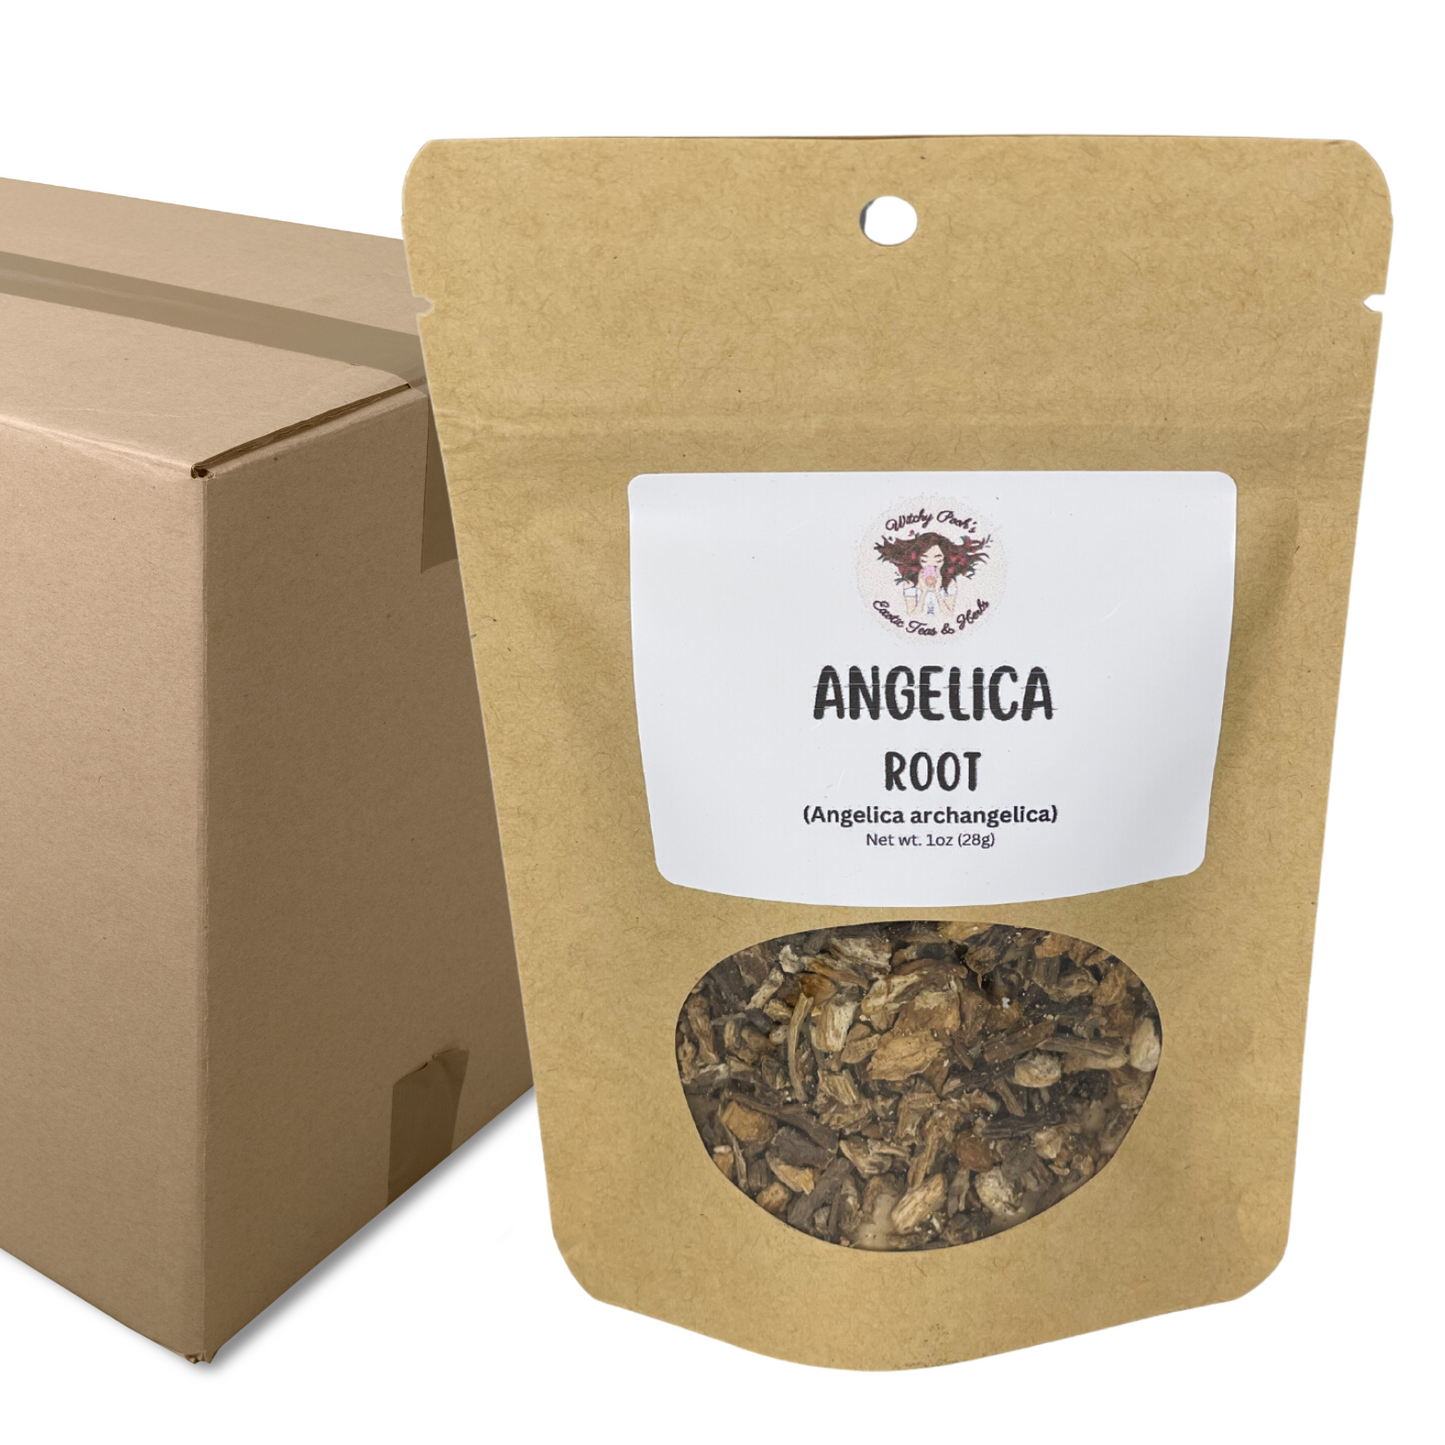 Angelica Root Invigorate your spirit